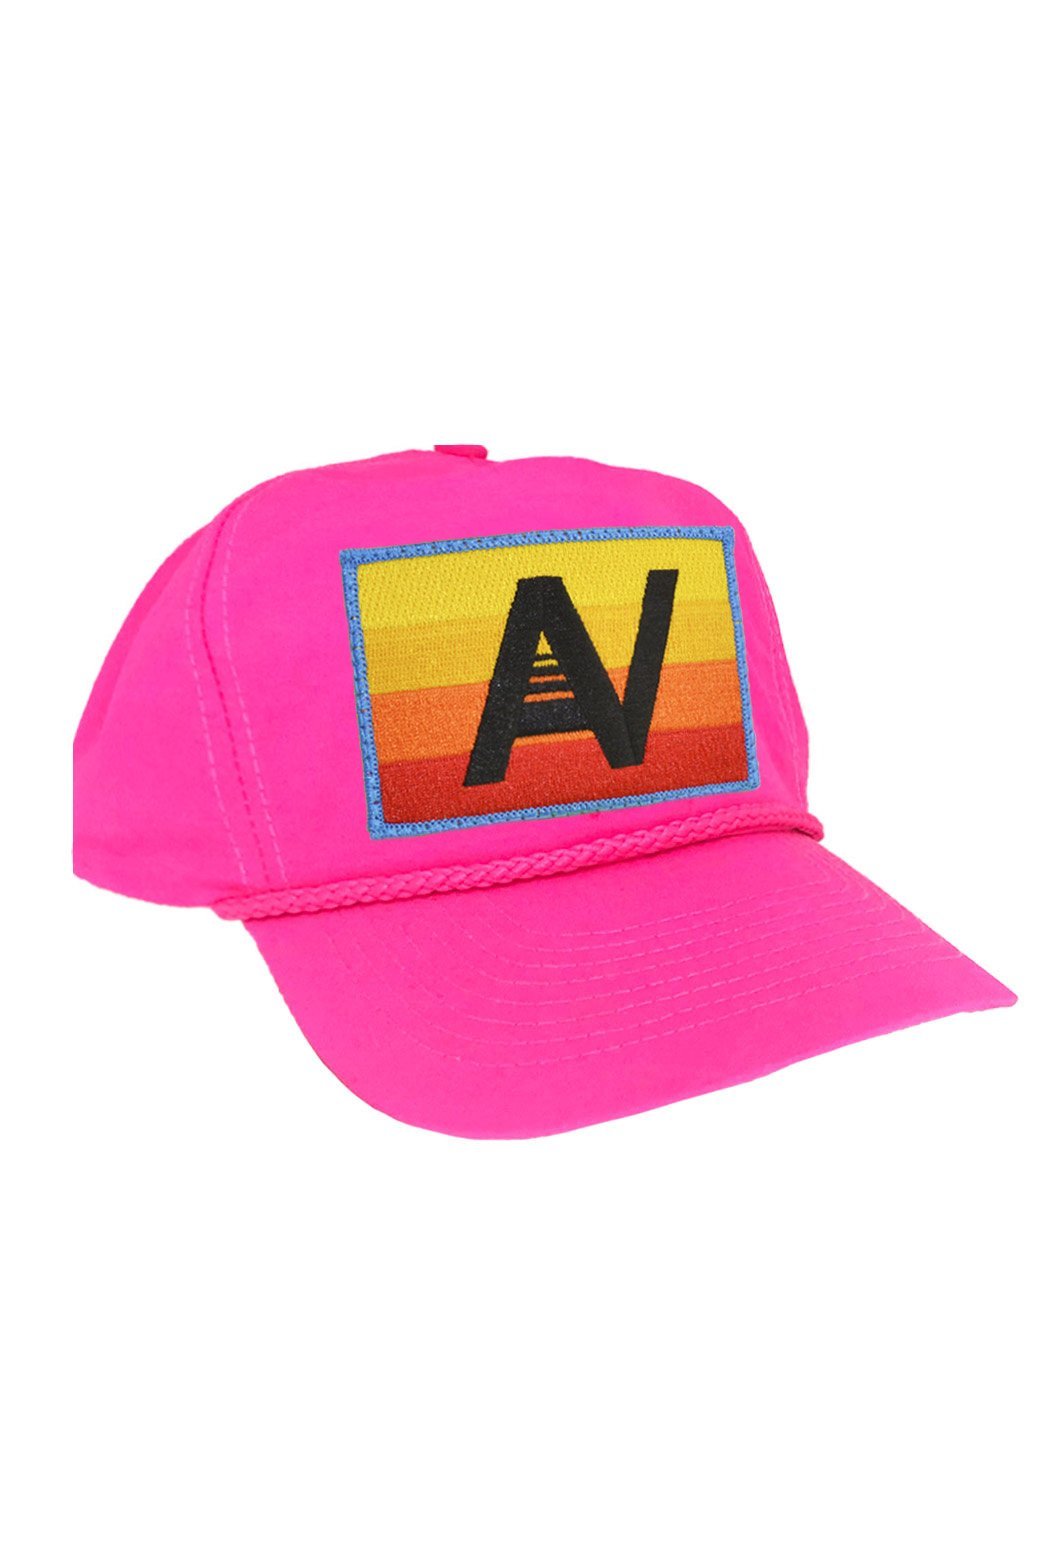 Vintage Nike Swoosh Hat Cap Snapback SpellOut Cap Nylon 80s Rare Neon Hot  Pink